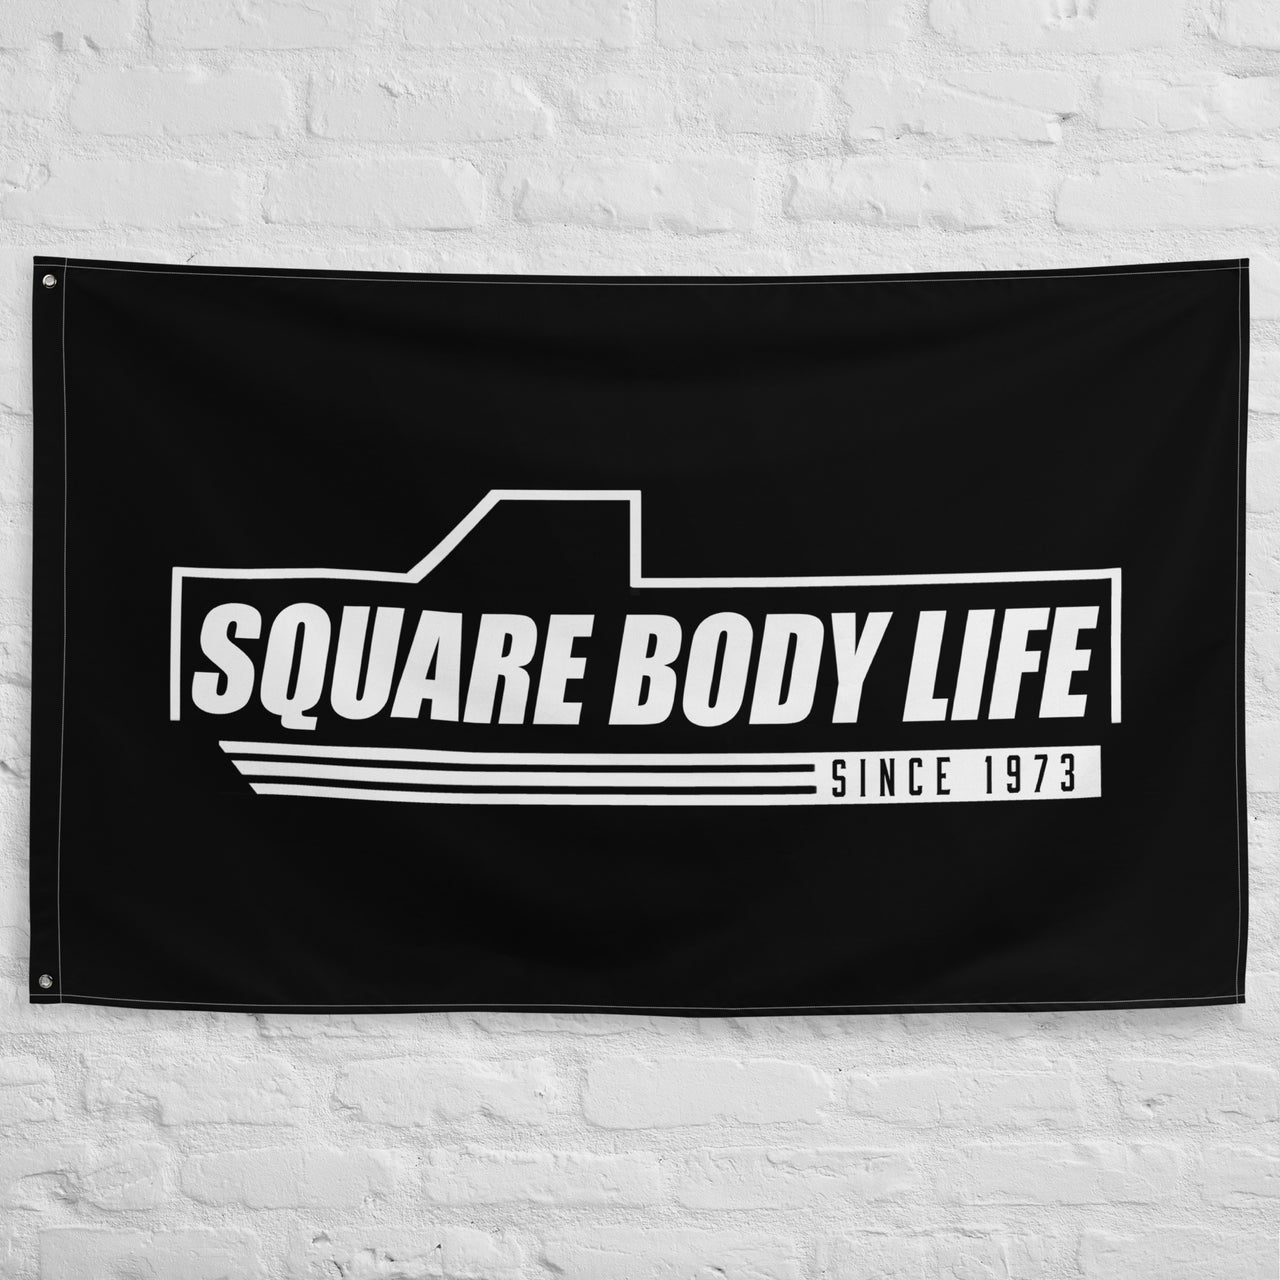 Squarebody Life Flag - Since 1973